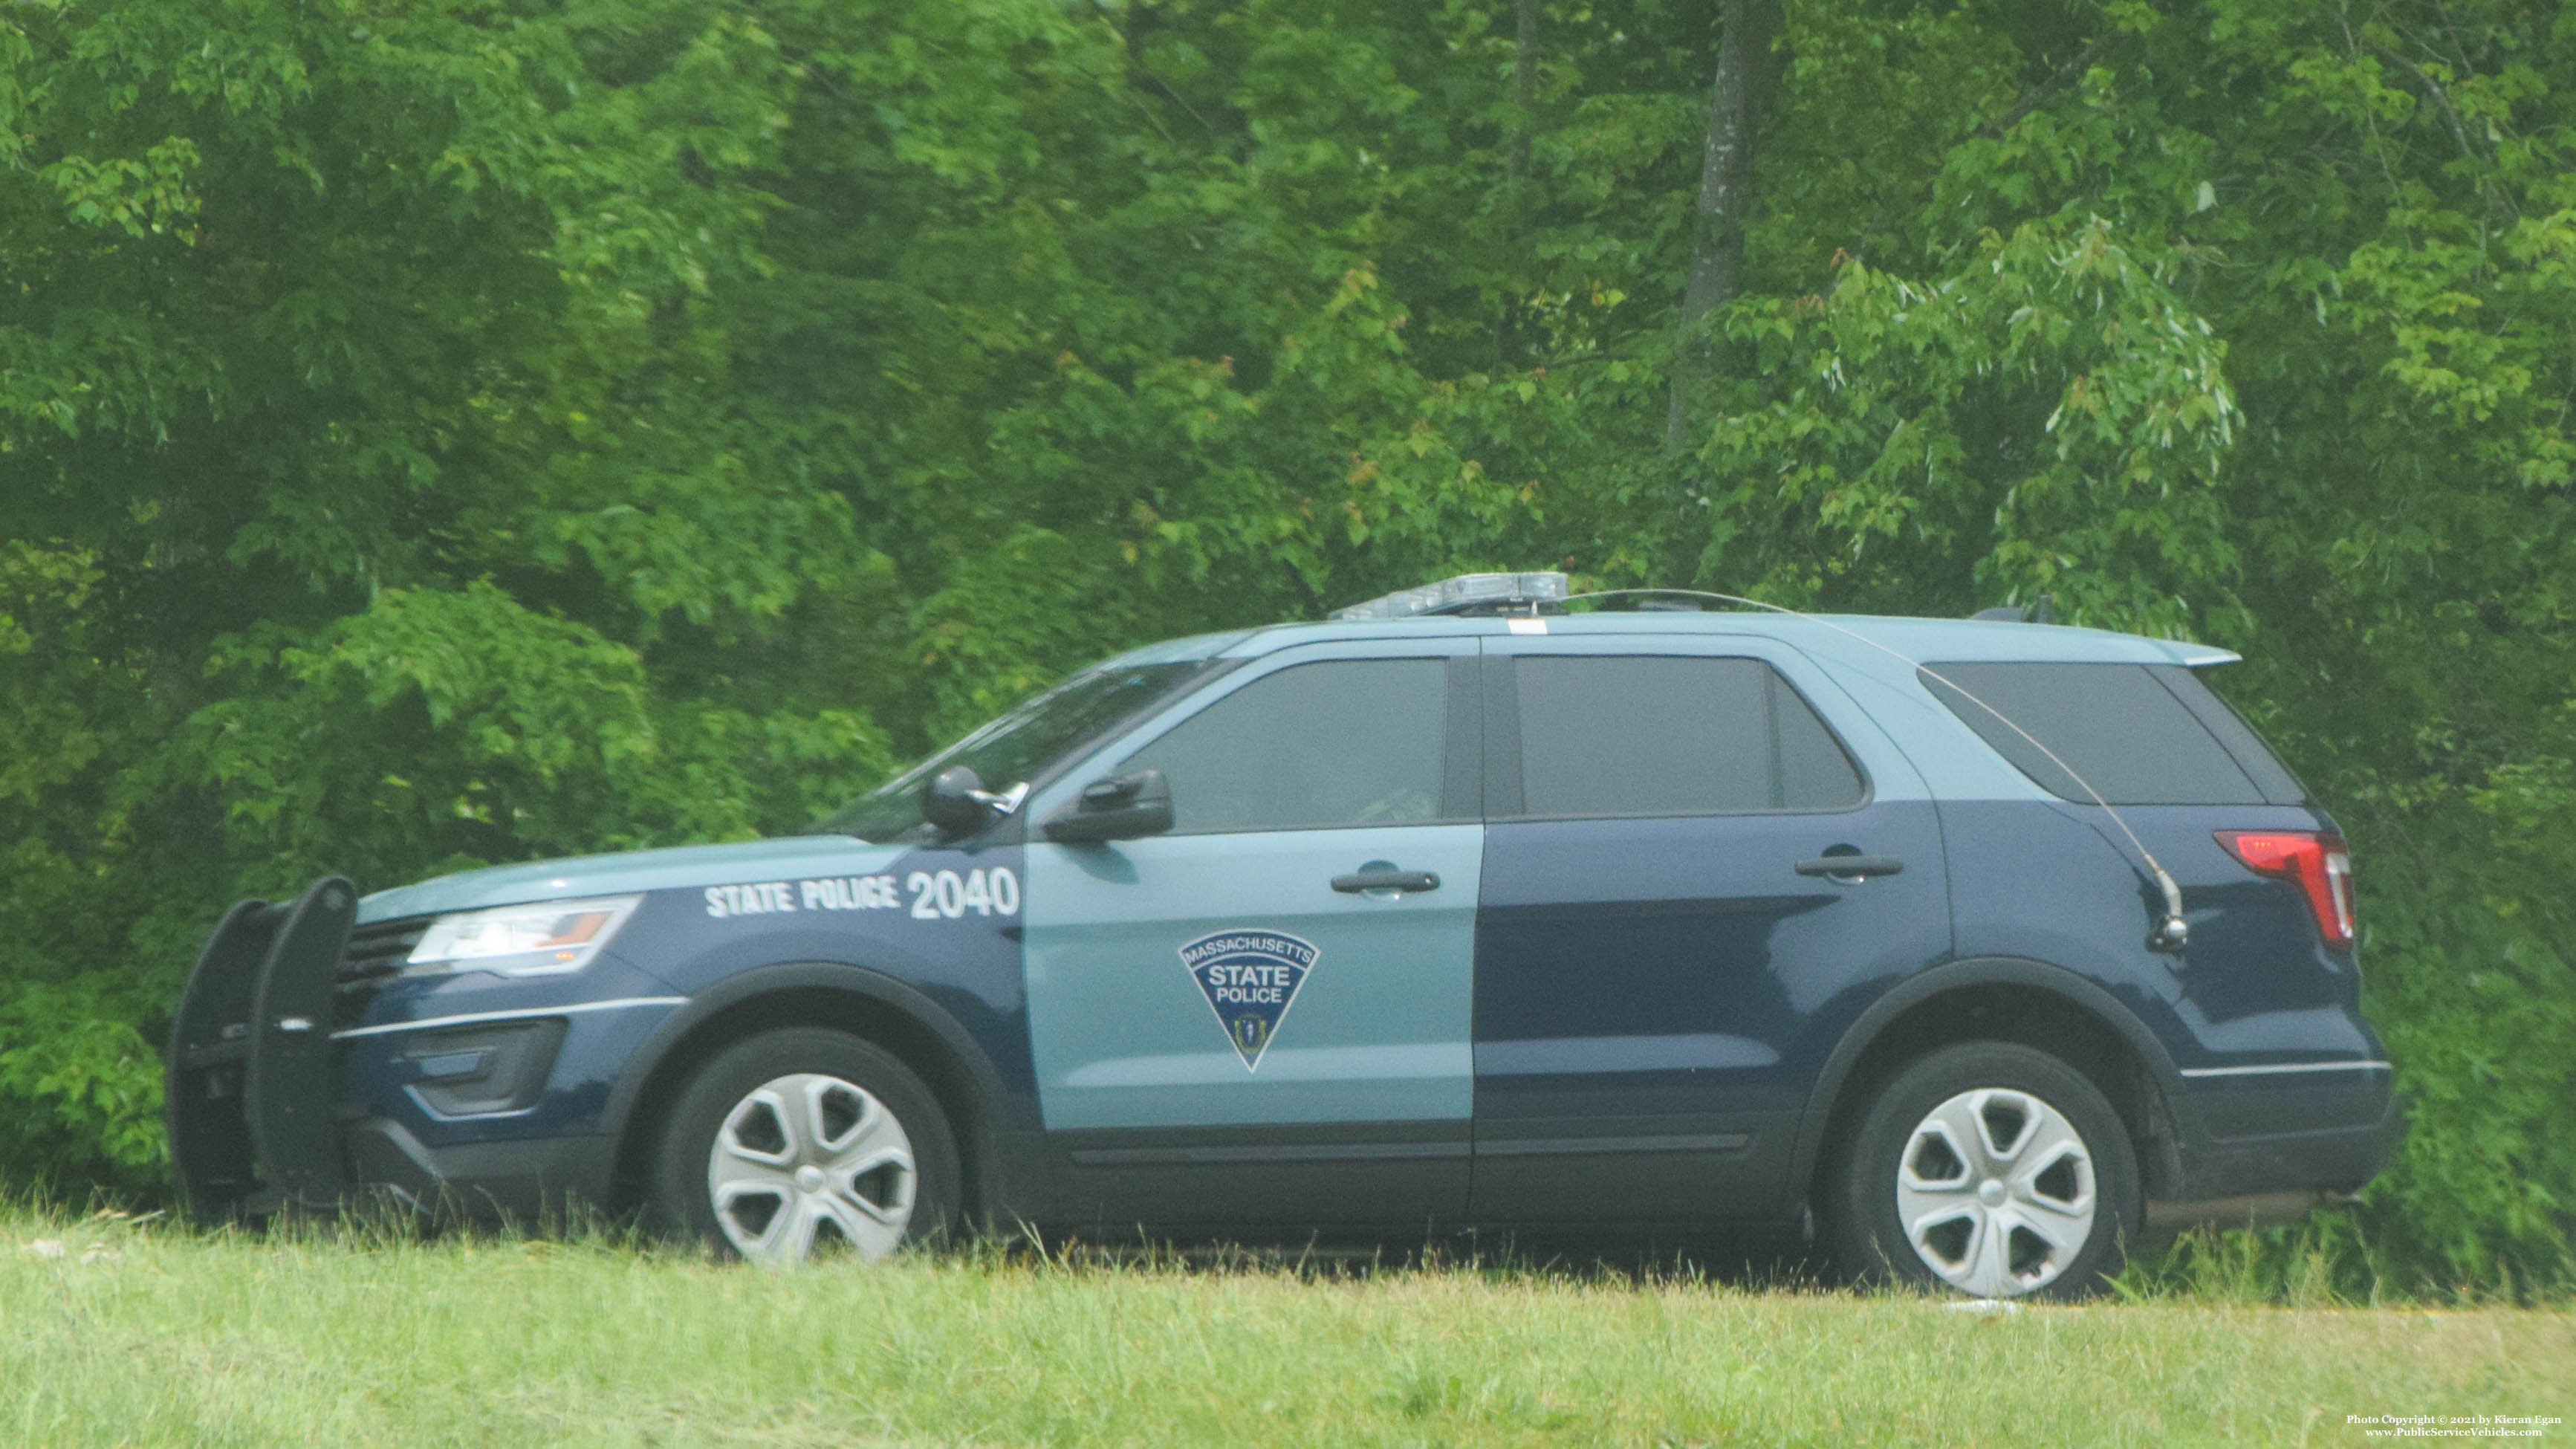 A photo  of Massachusetts State Police
            Cruiser 2040, a 2018 Ford Police Interceptor Utility             taken by Kieran Egan